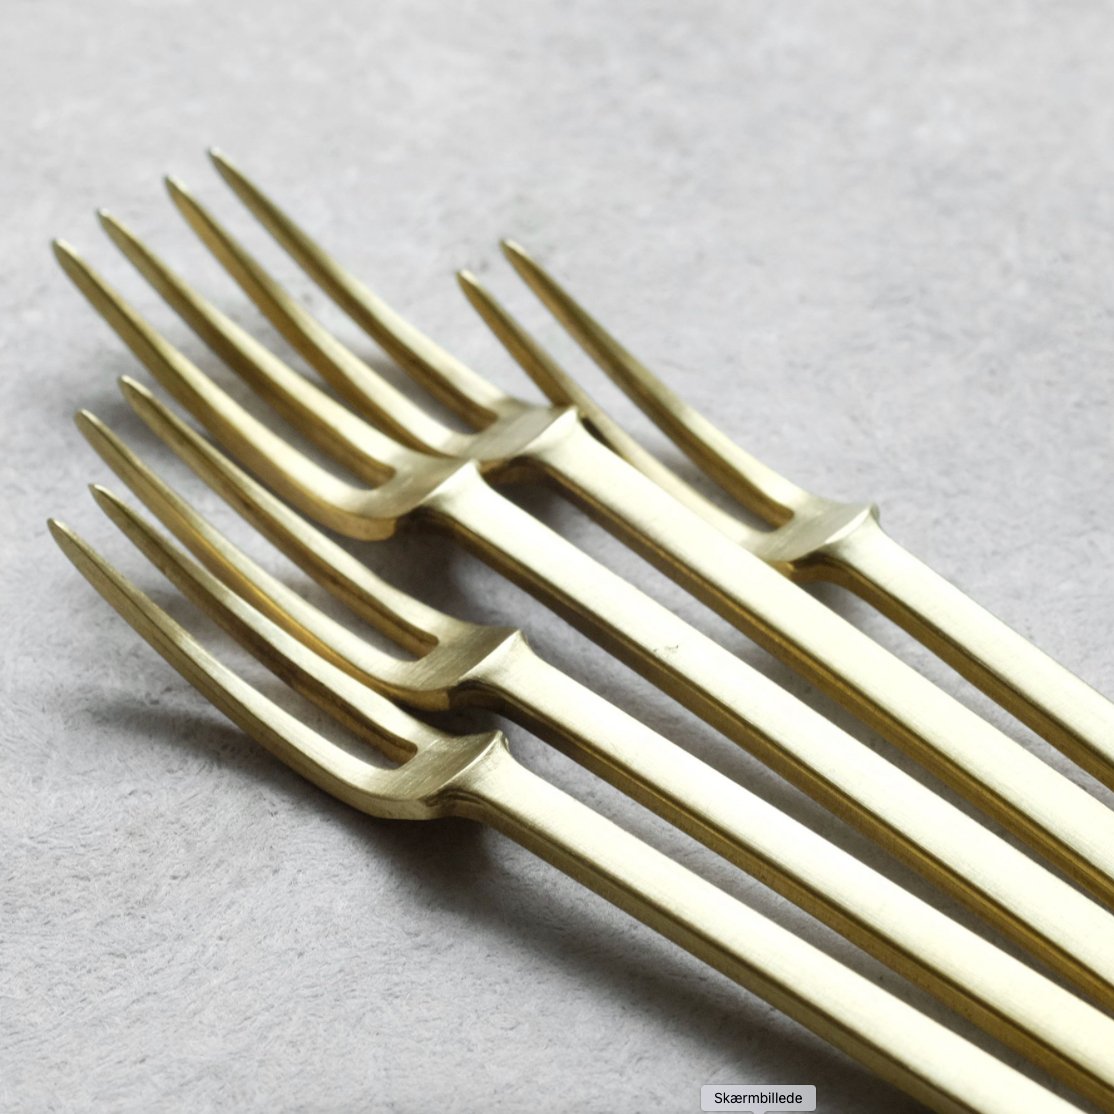 Sakami Kogei ‘Hime’ små japanske gafler i messing (5 styk)_2 by Rune-Jakobsen Design